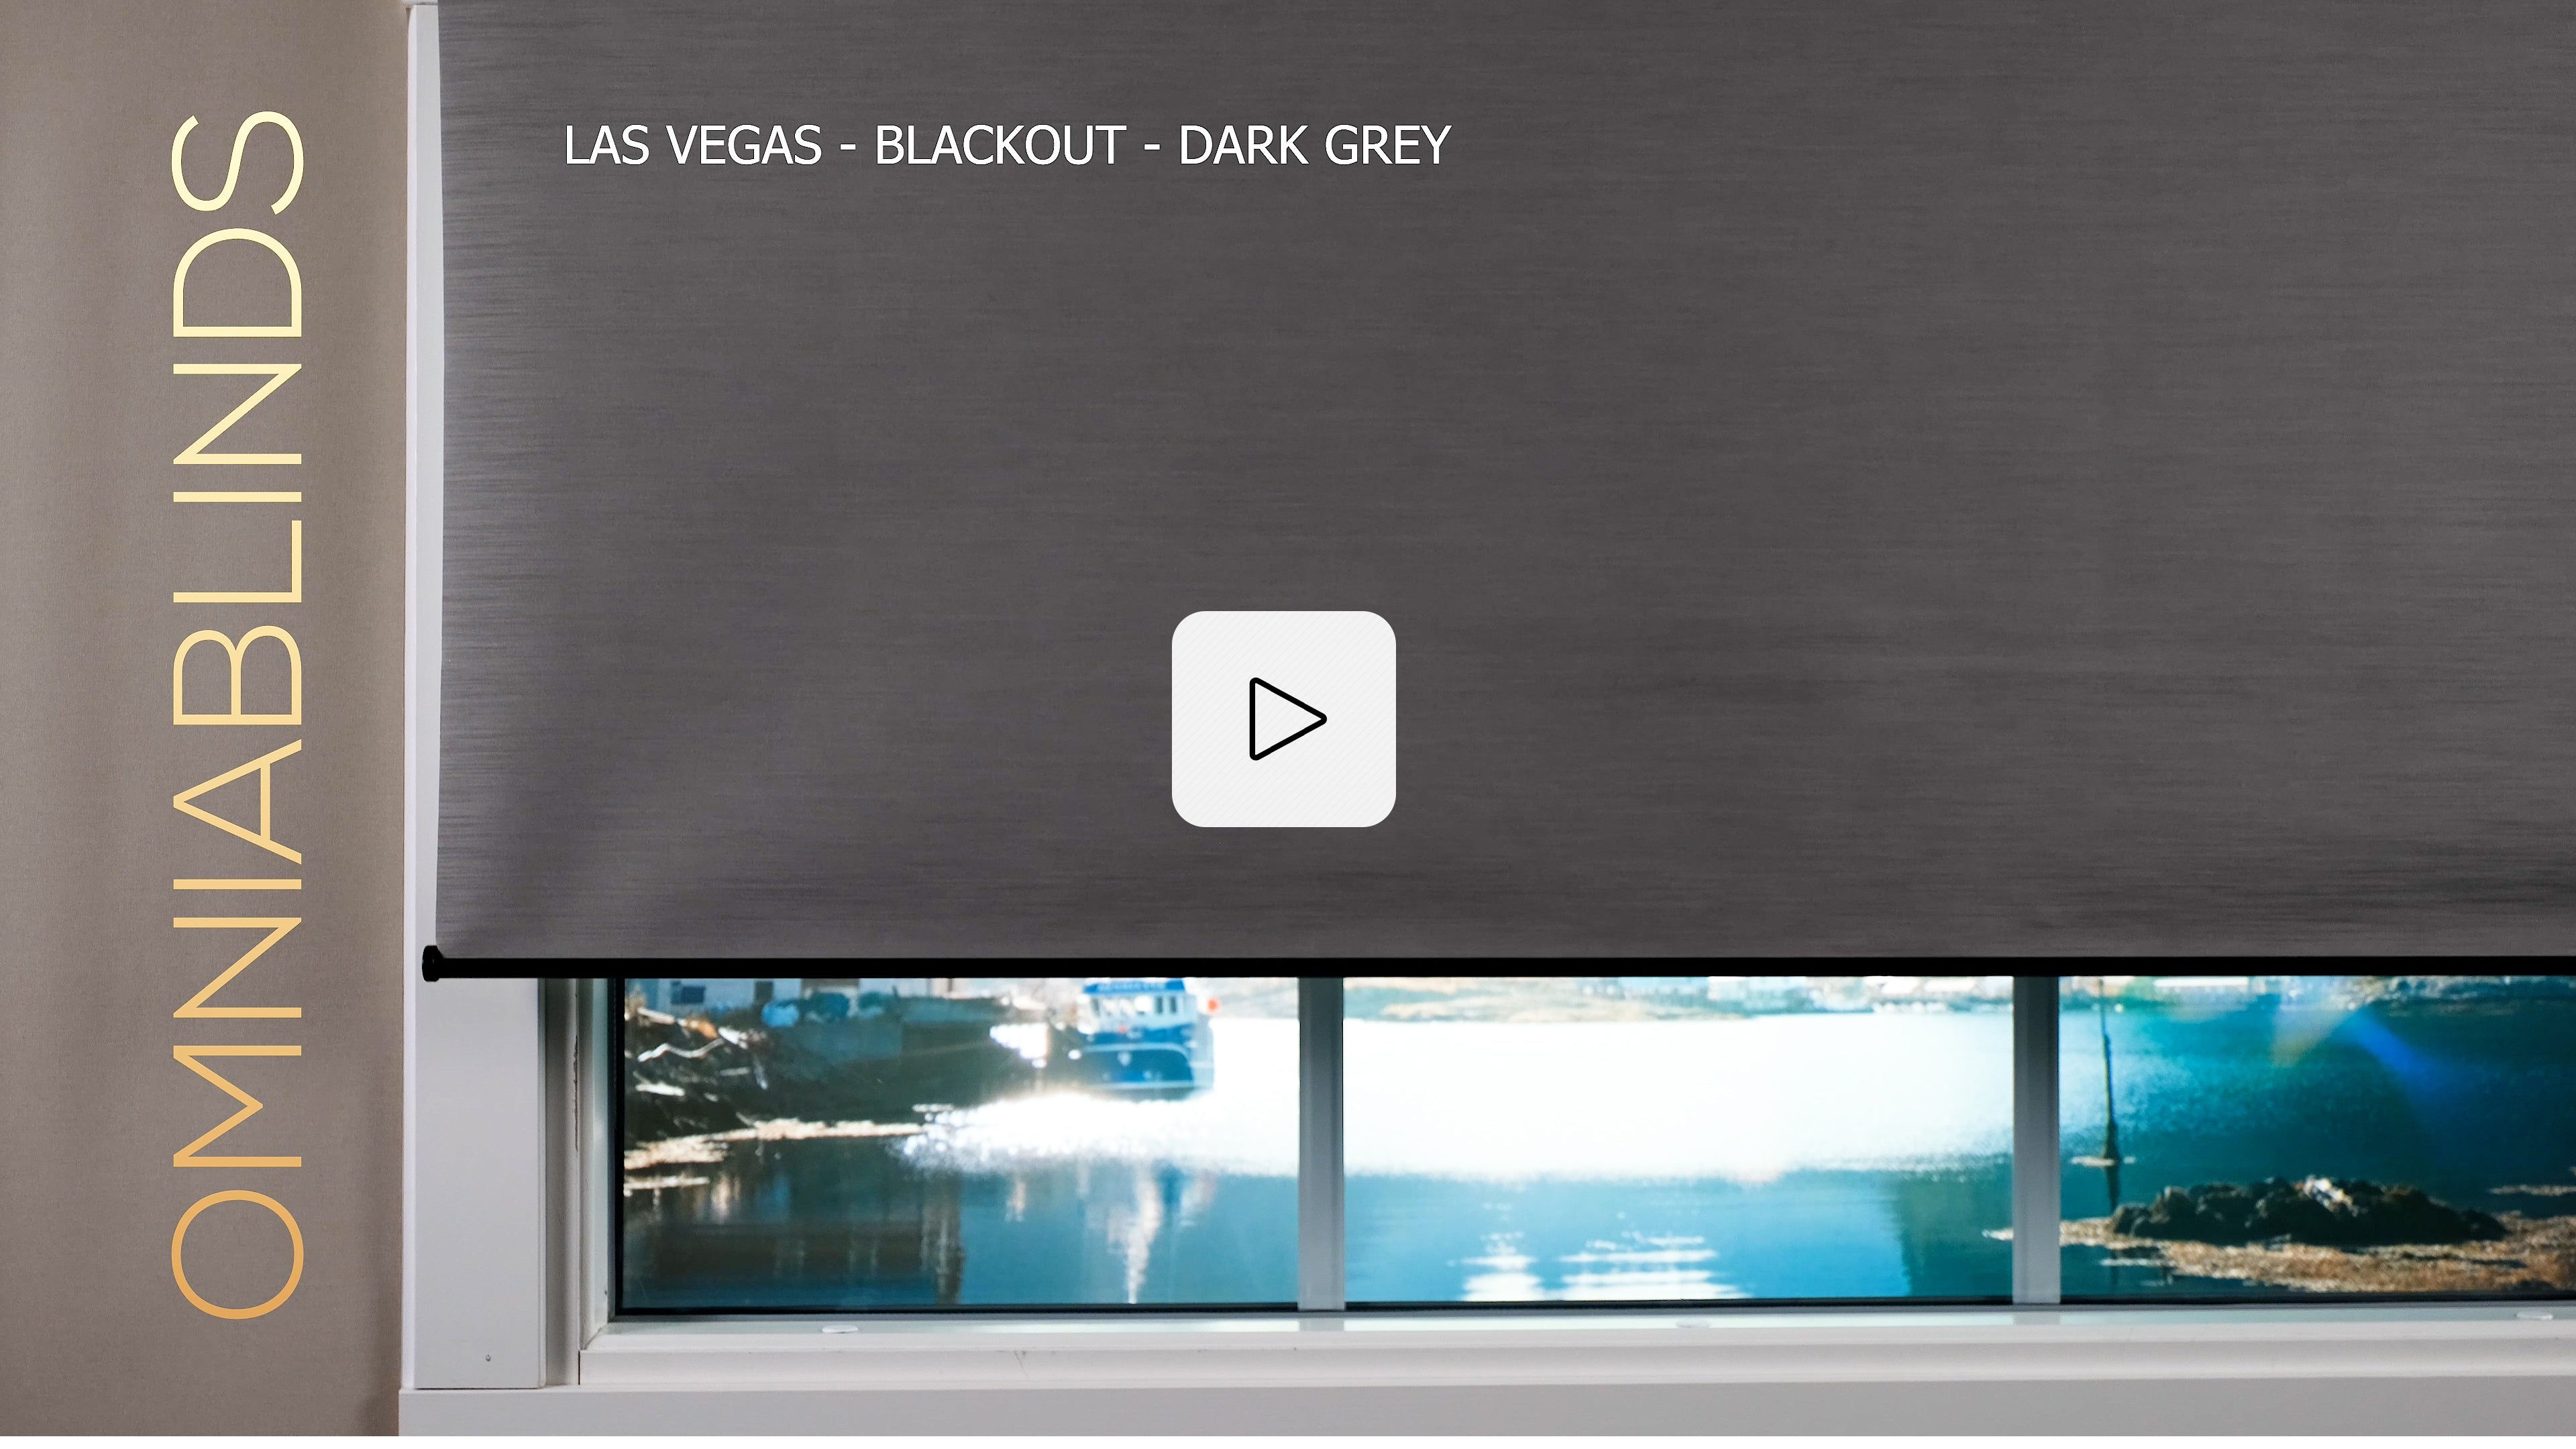 Las Vegas - Blackout - Dark Grey